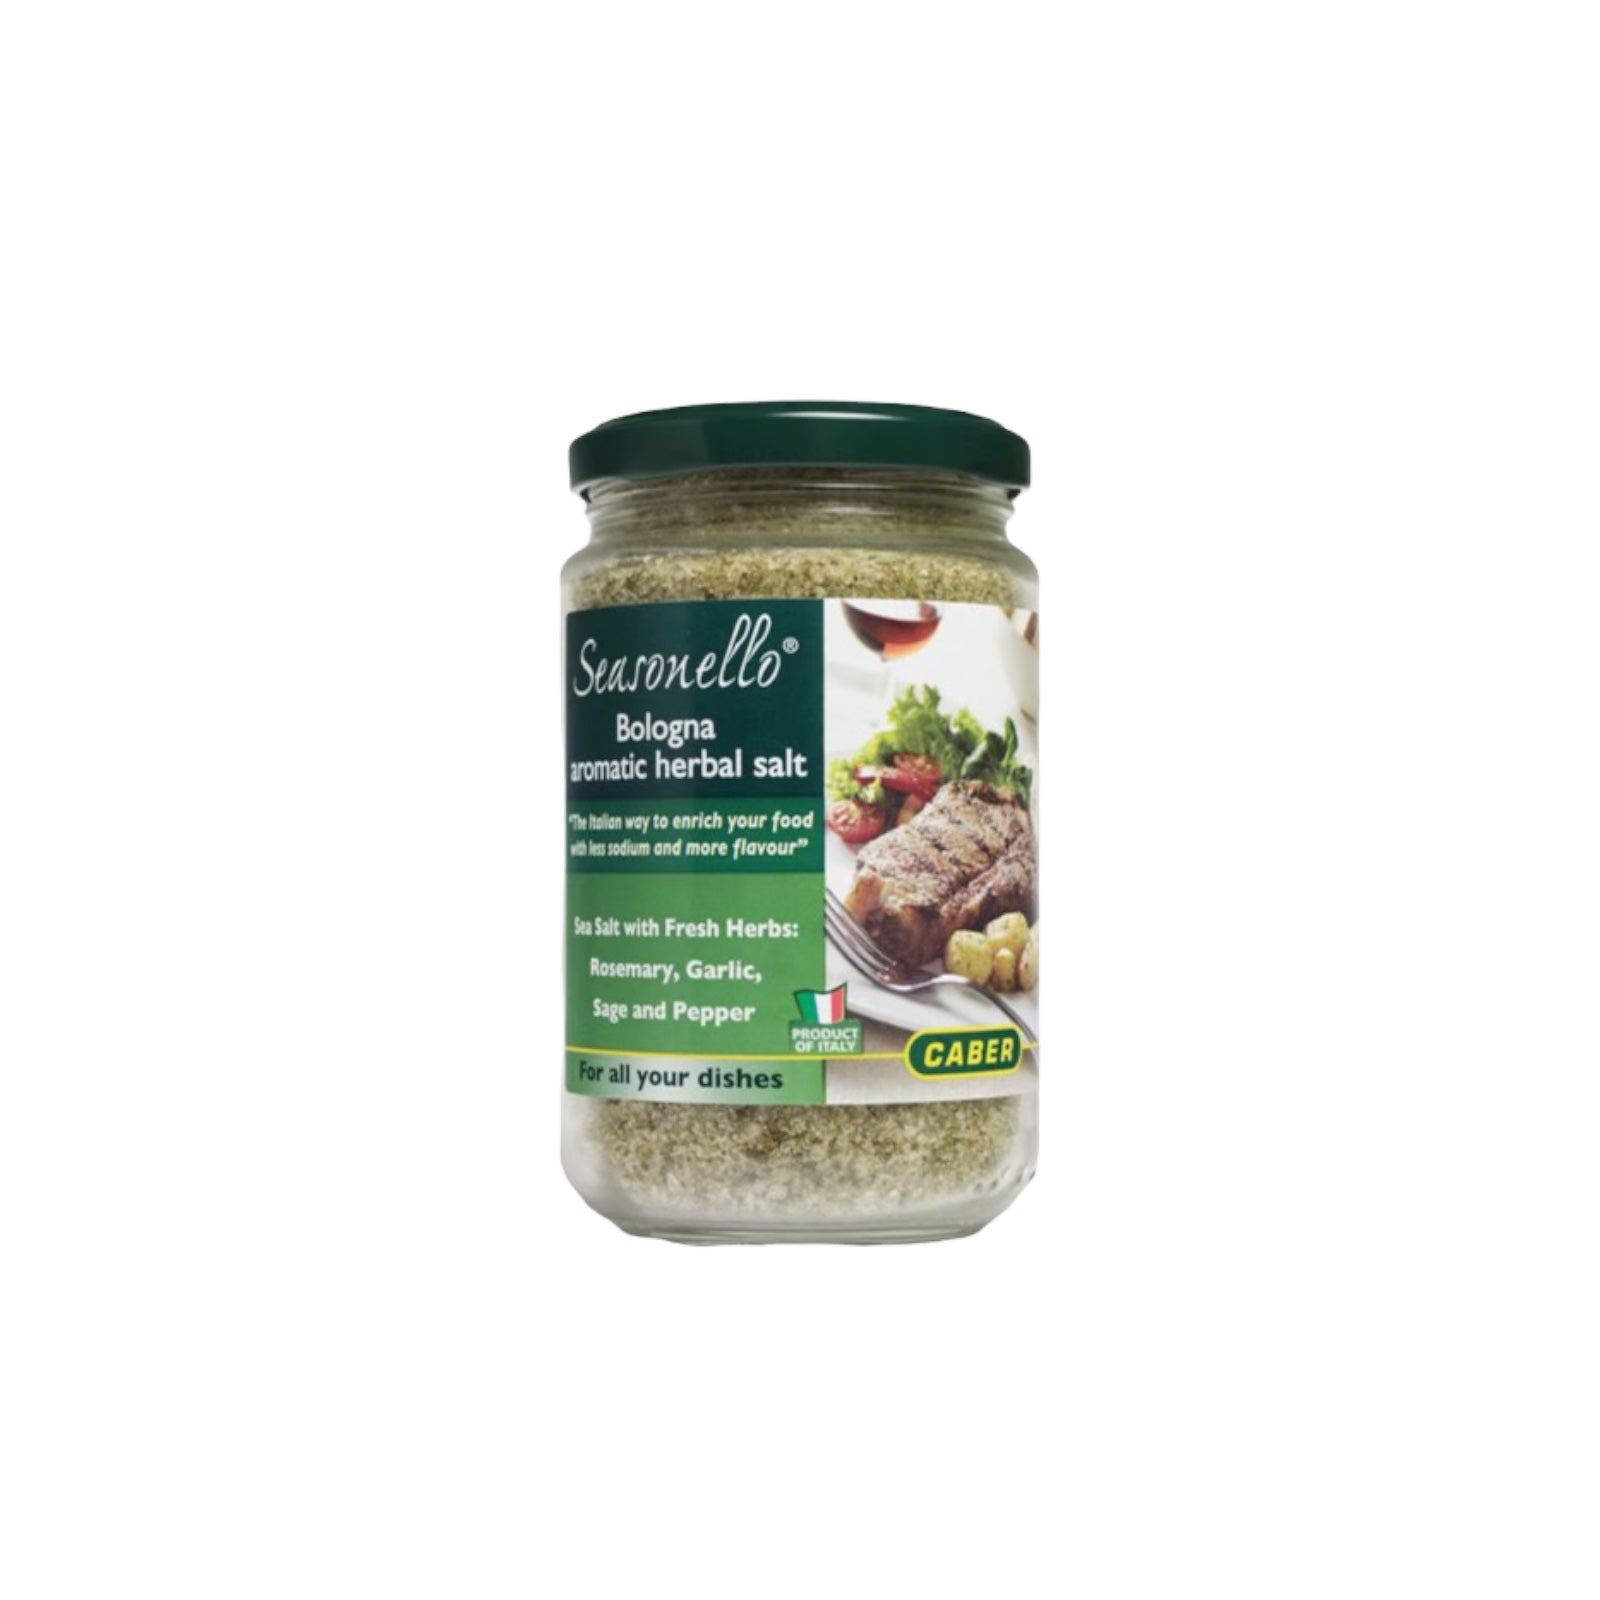 Seasonello  Bologna Aromatic Herbal Salt 10.58 oz